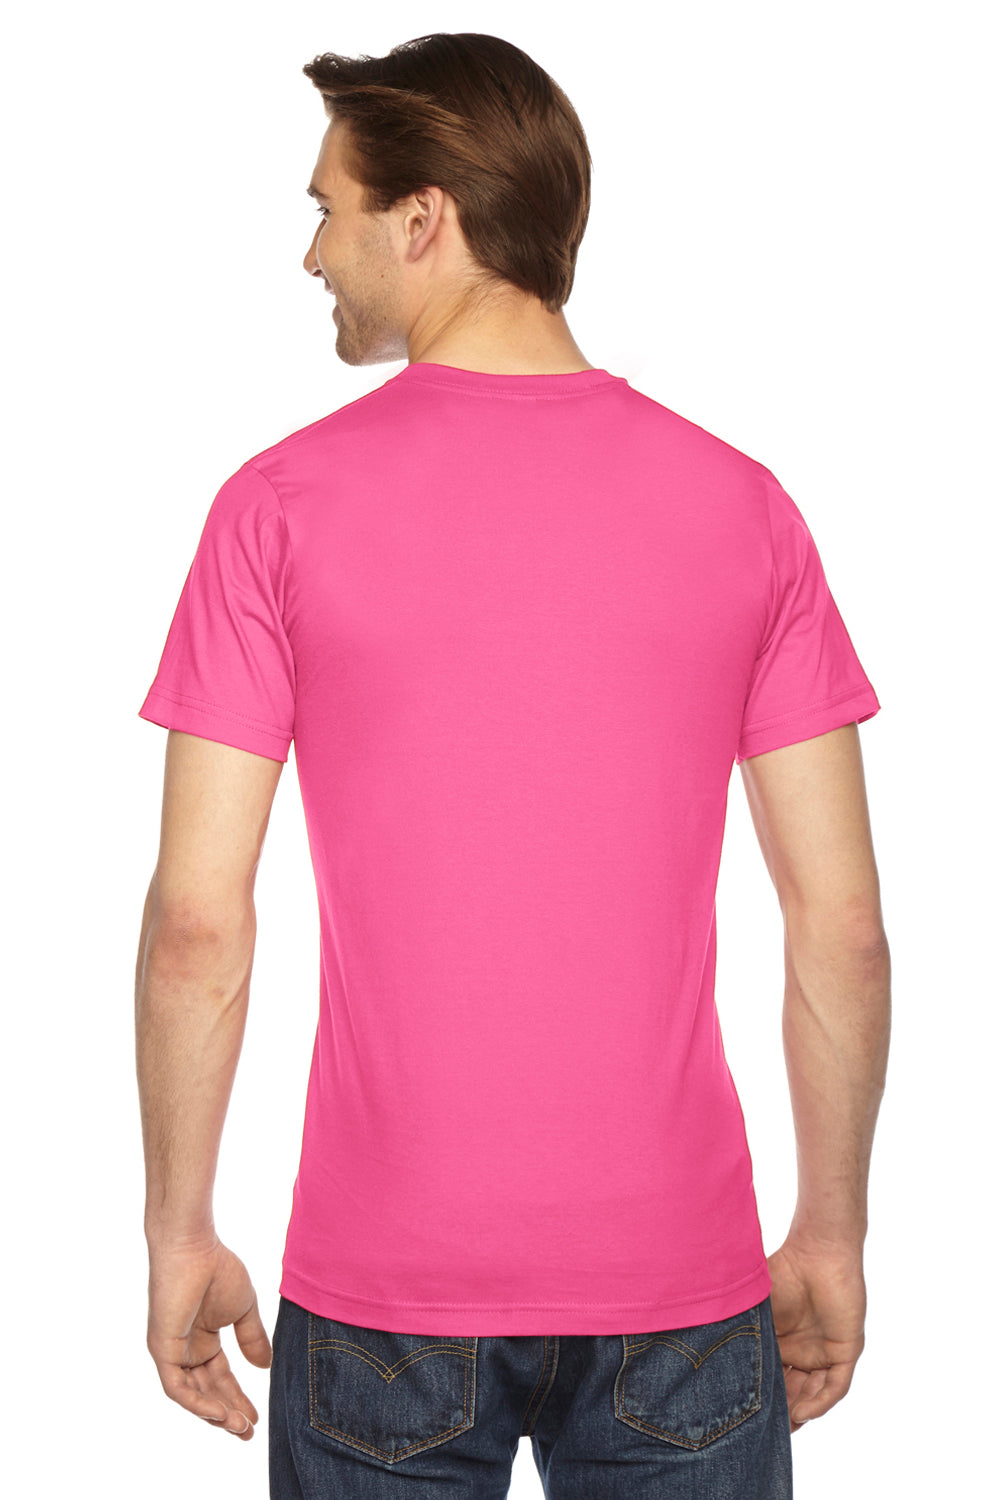 American Apparel 2001 Mens USA Made Fine Jersey Short Sleeve Crewneck T-Shirt Fuchsia Pink Back